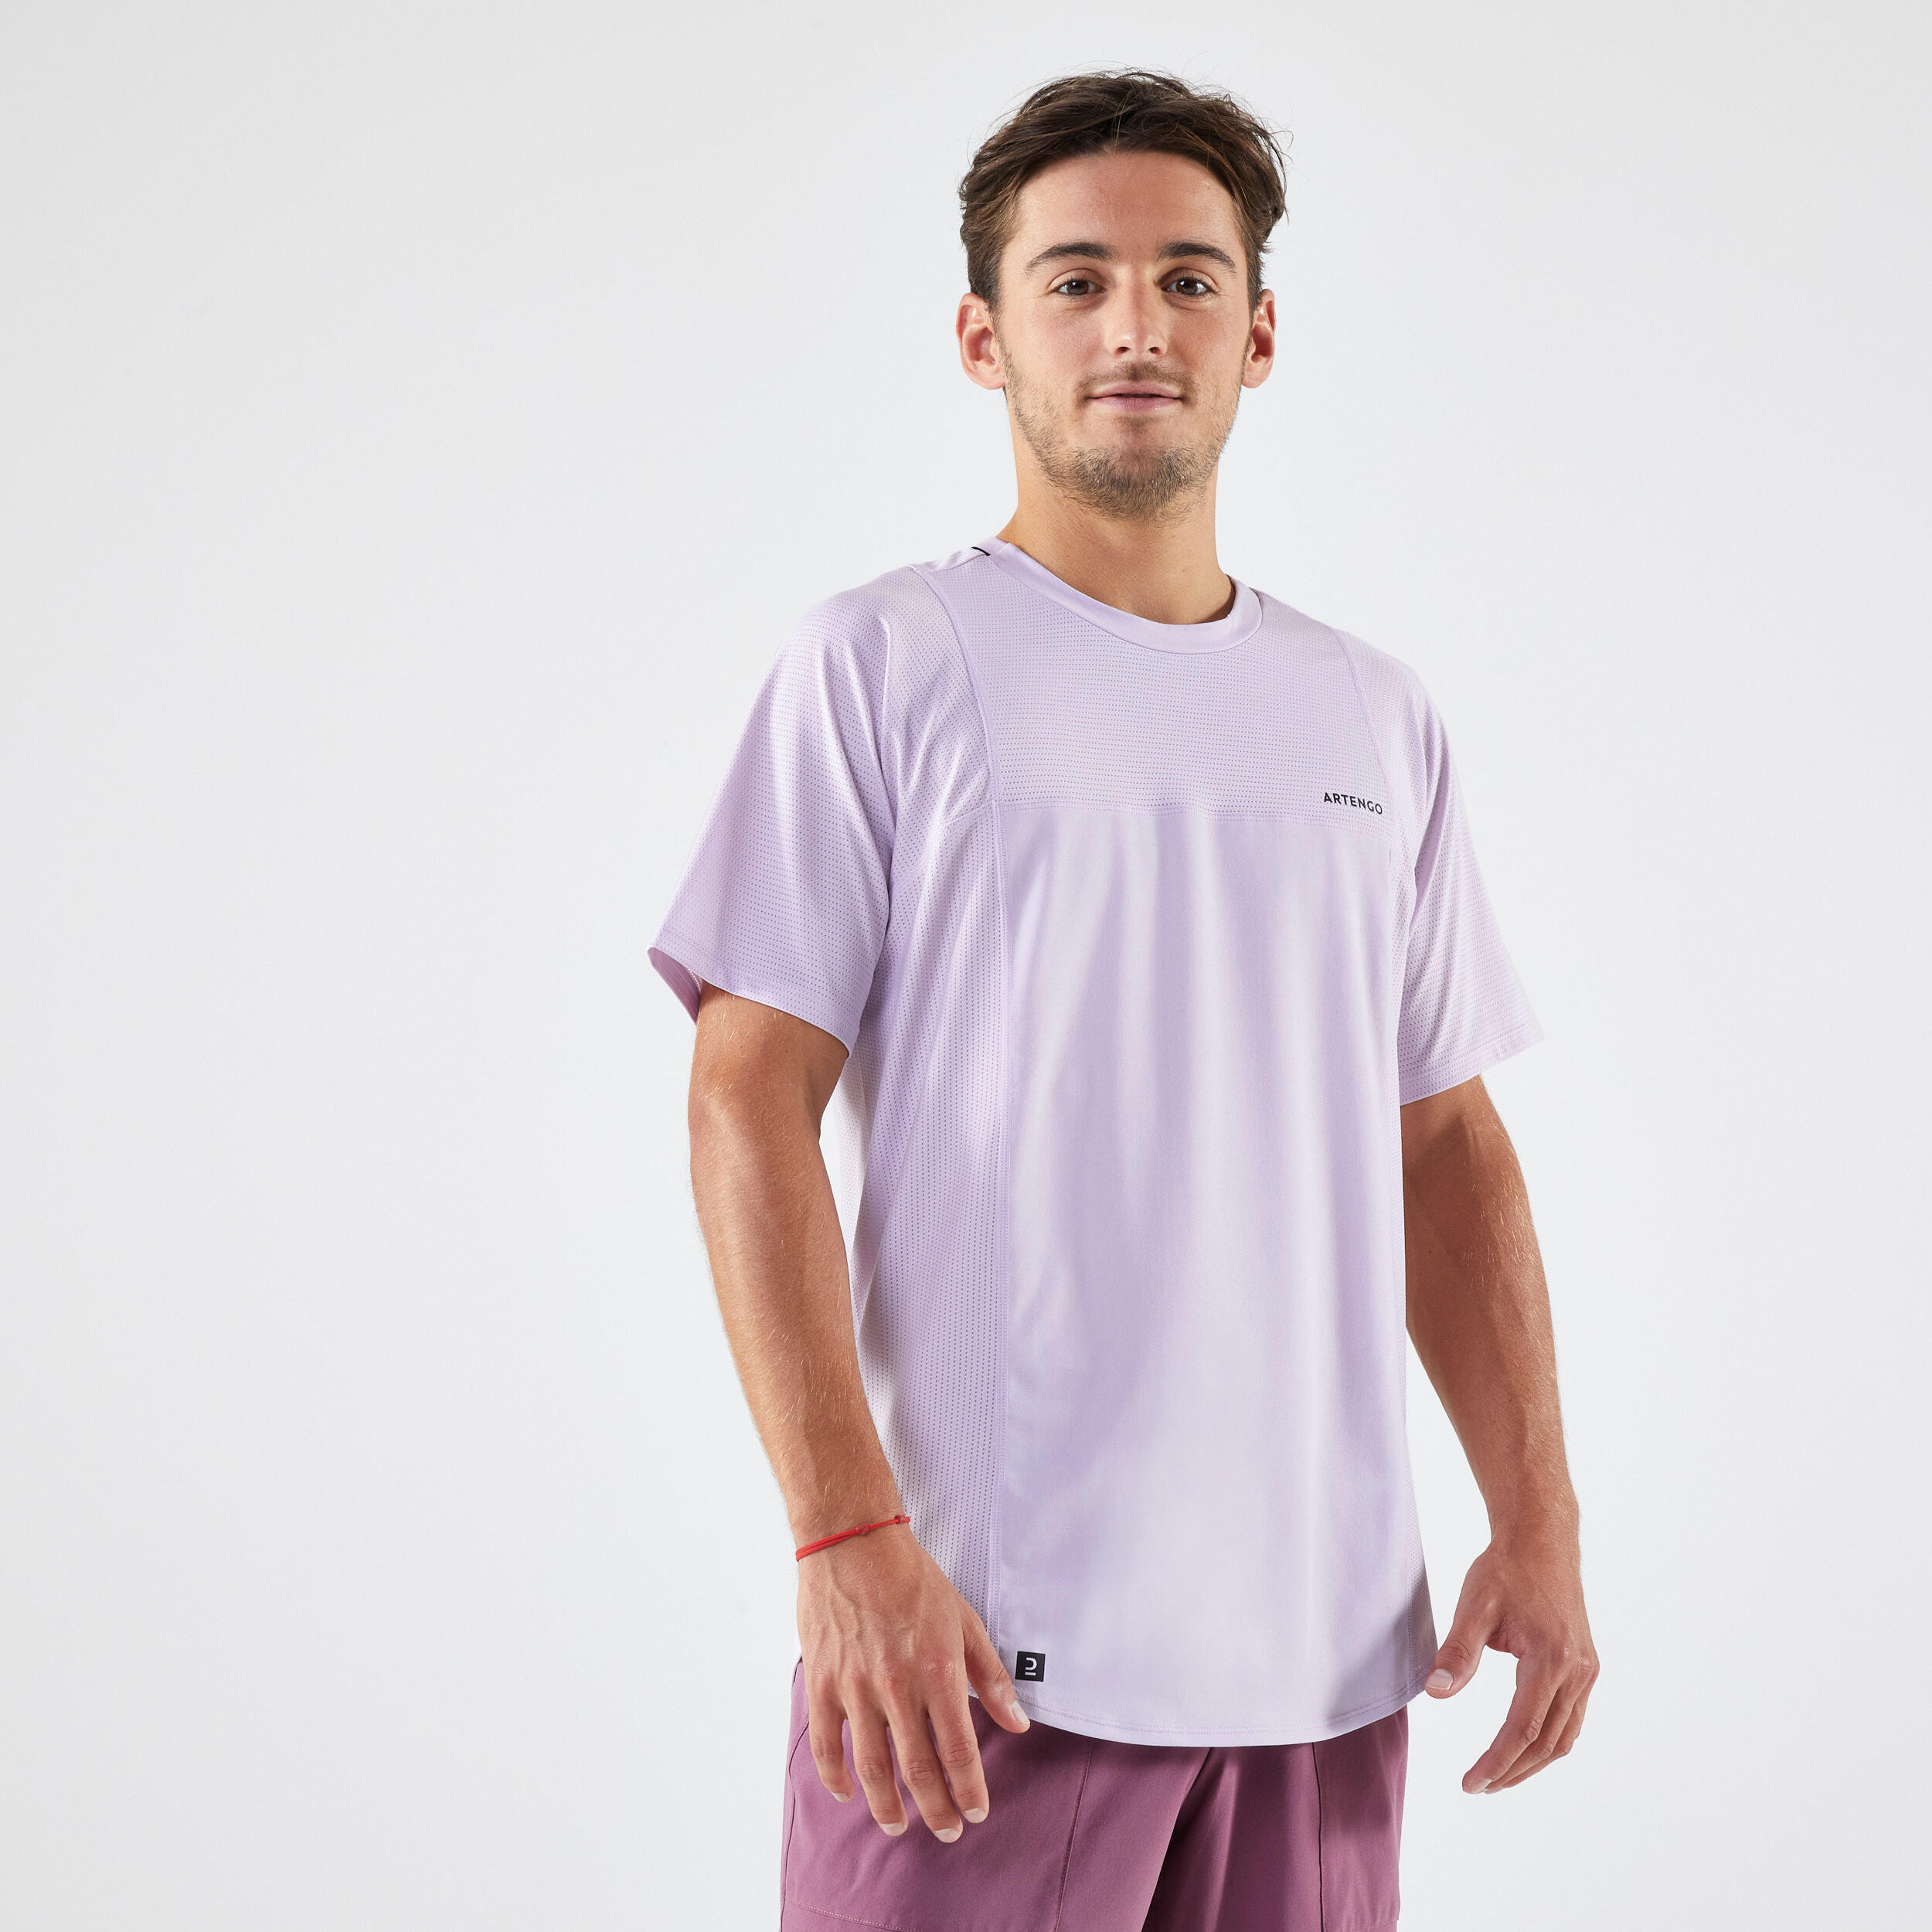 Men's Short-Sleeved Tennis T-Shirt Dry Gaël Monfils - Purple 1/6